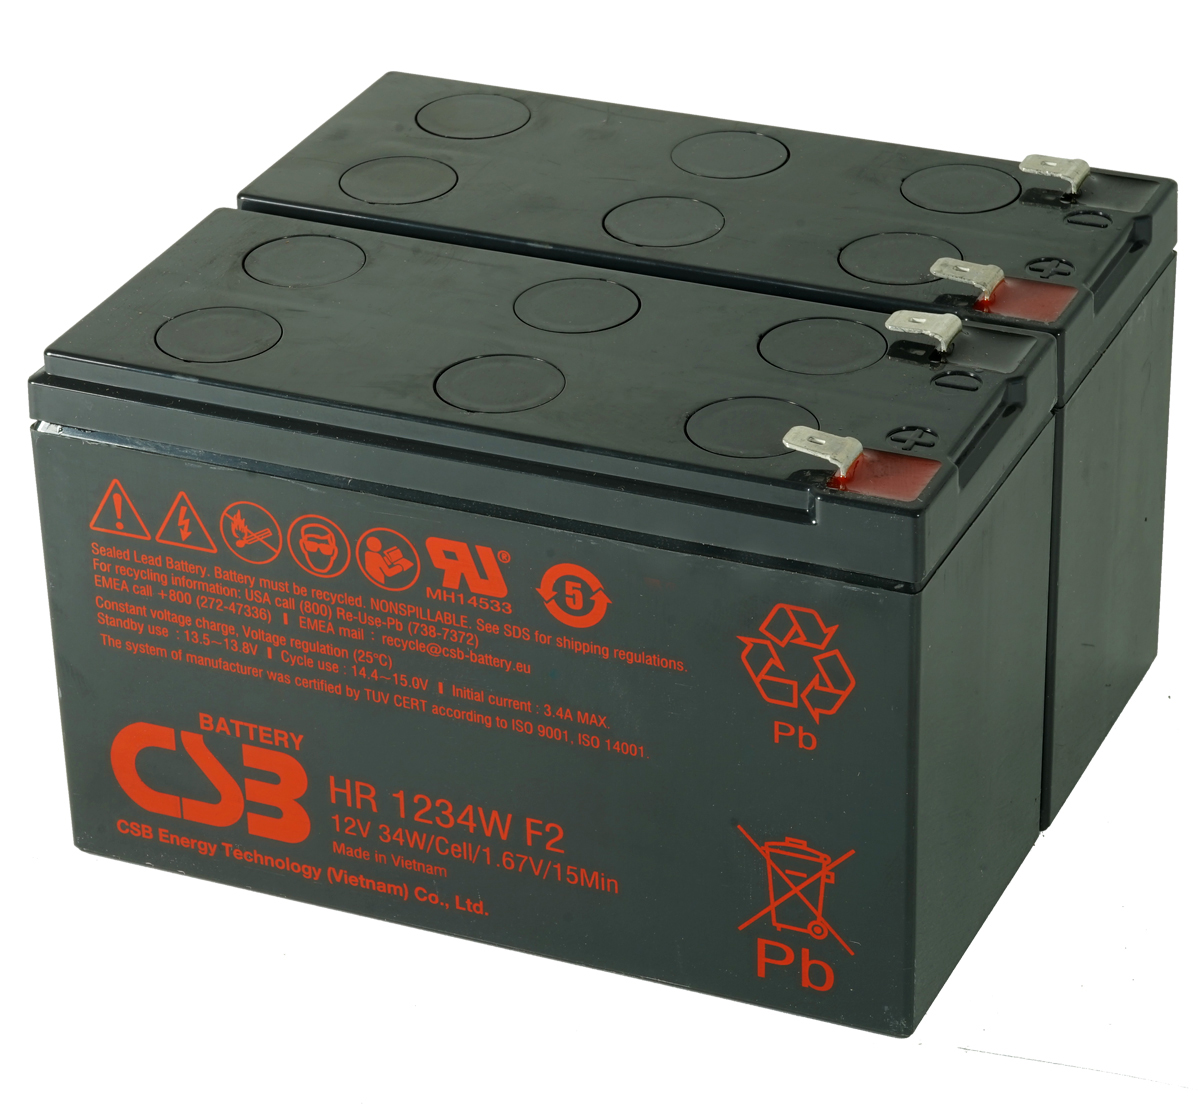 MDS160 UPS Battery Kit - Replaces APC RBC160